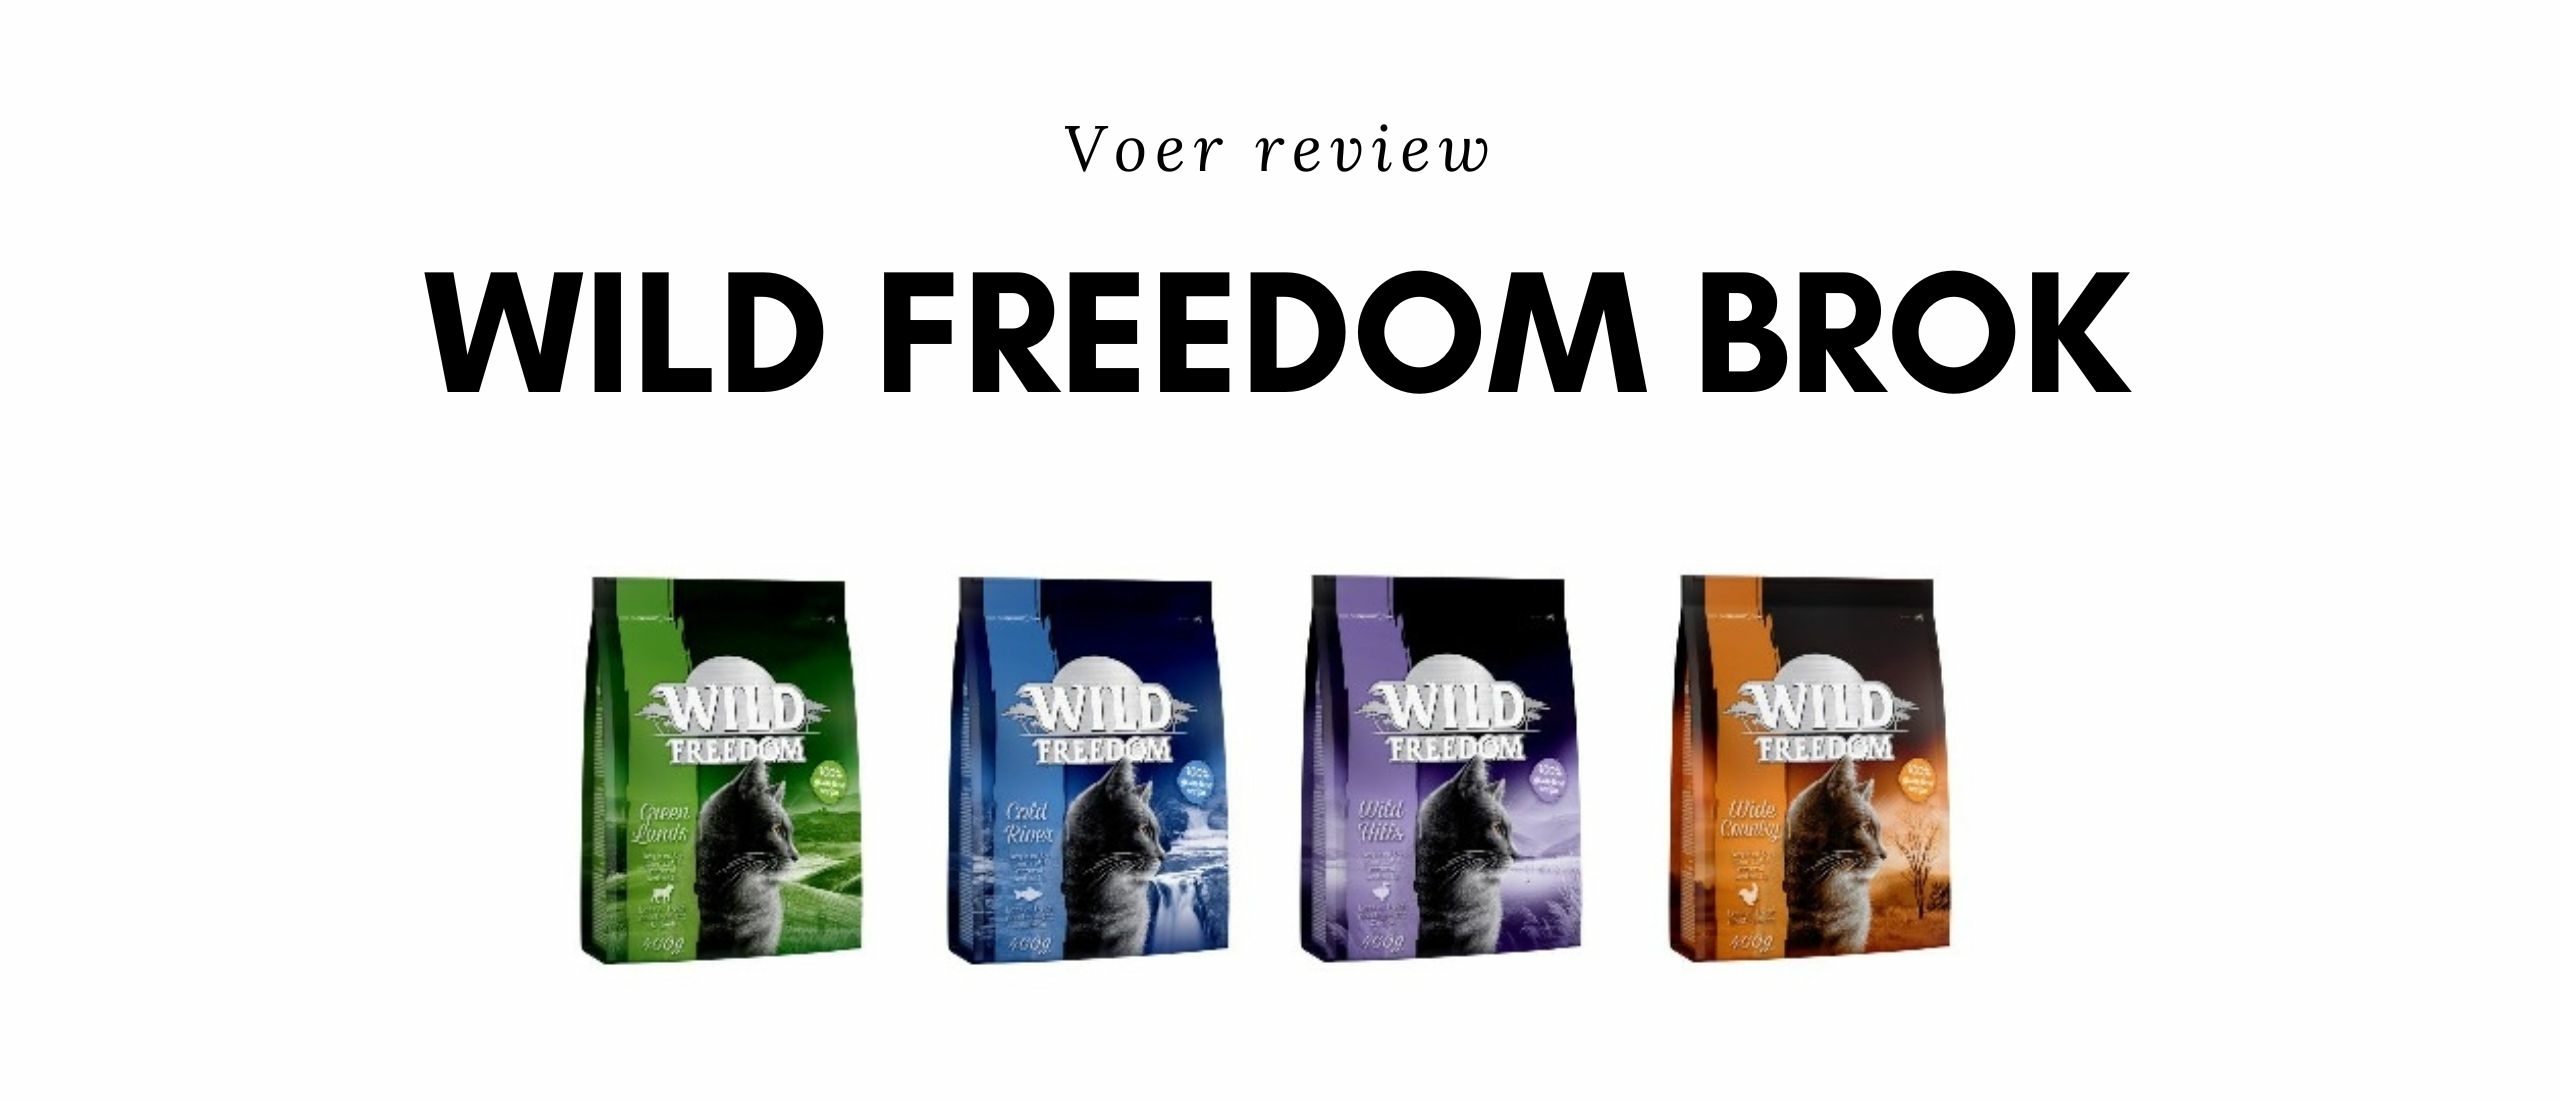 Voer review Wild Freedom Brok